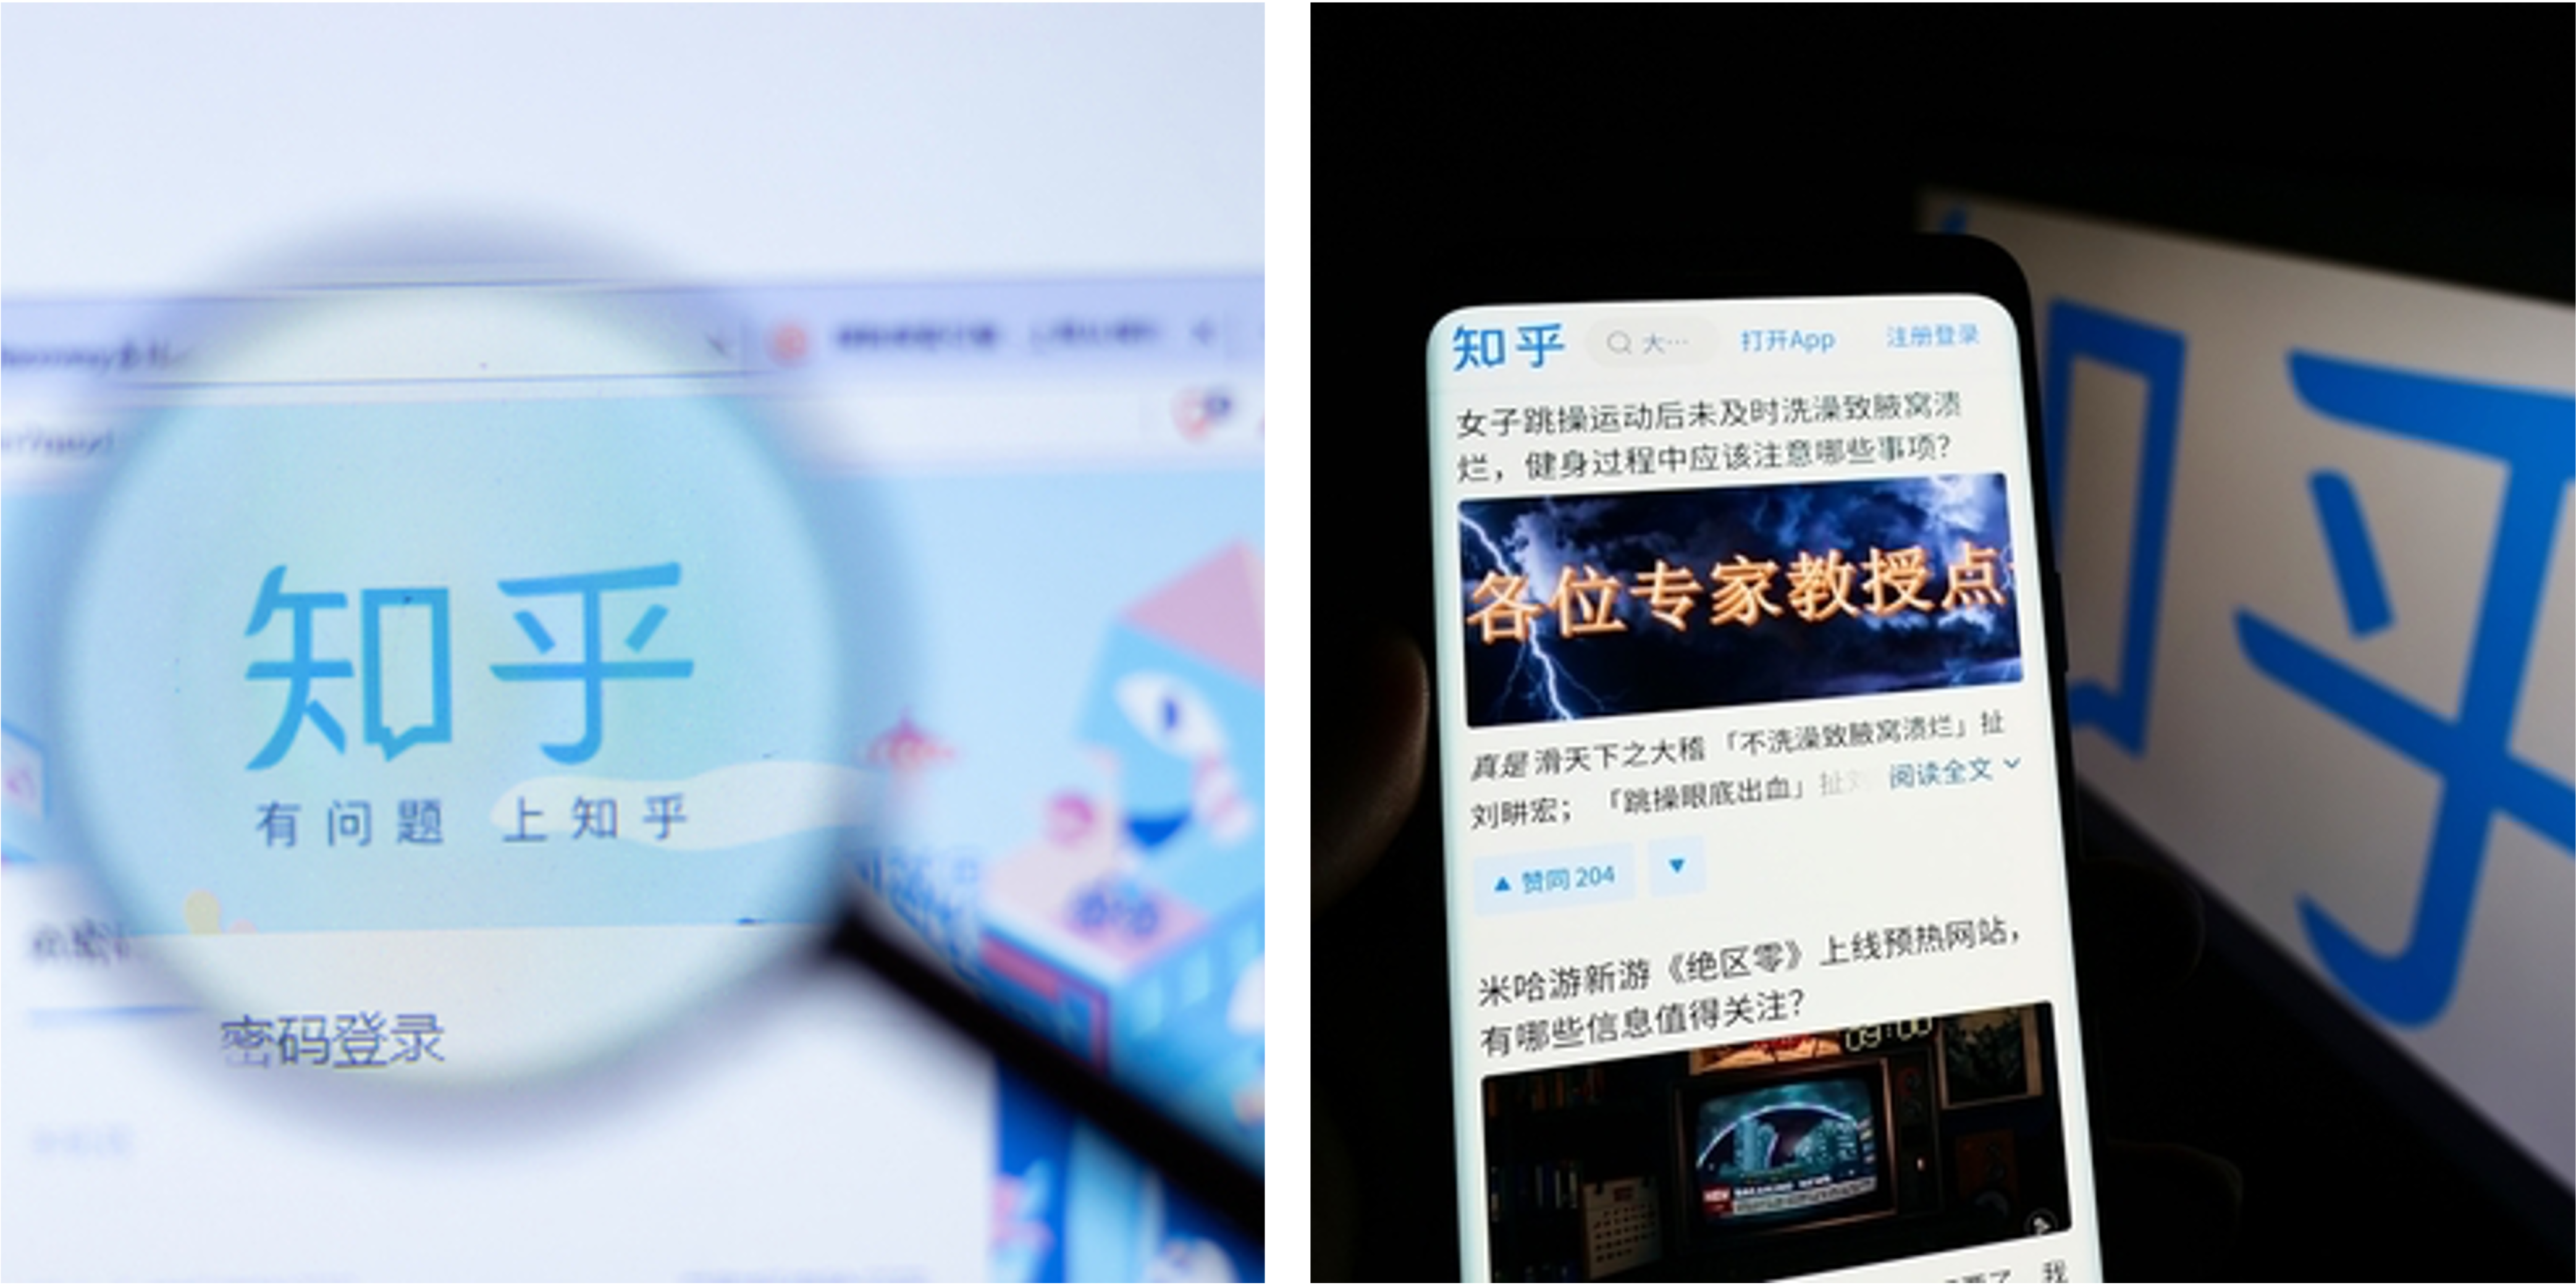 social media platforms & APPs in China: zhihu